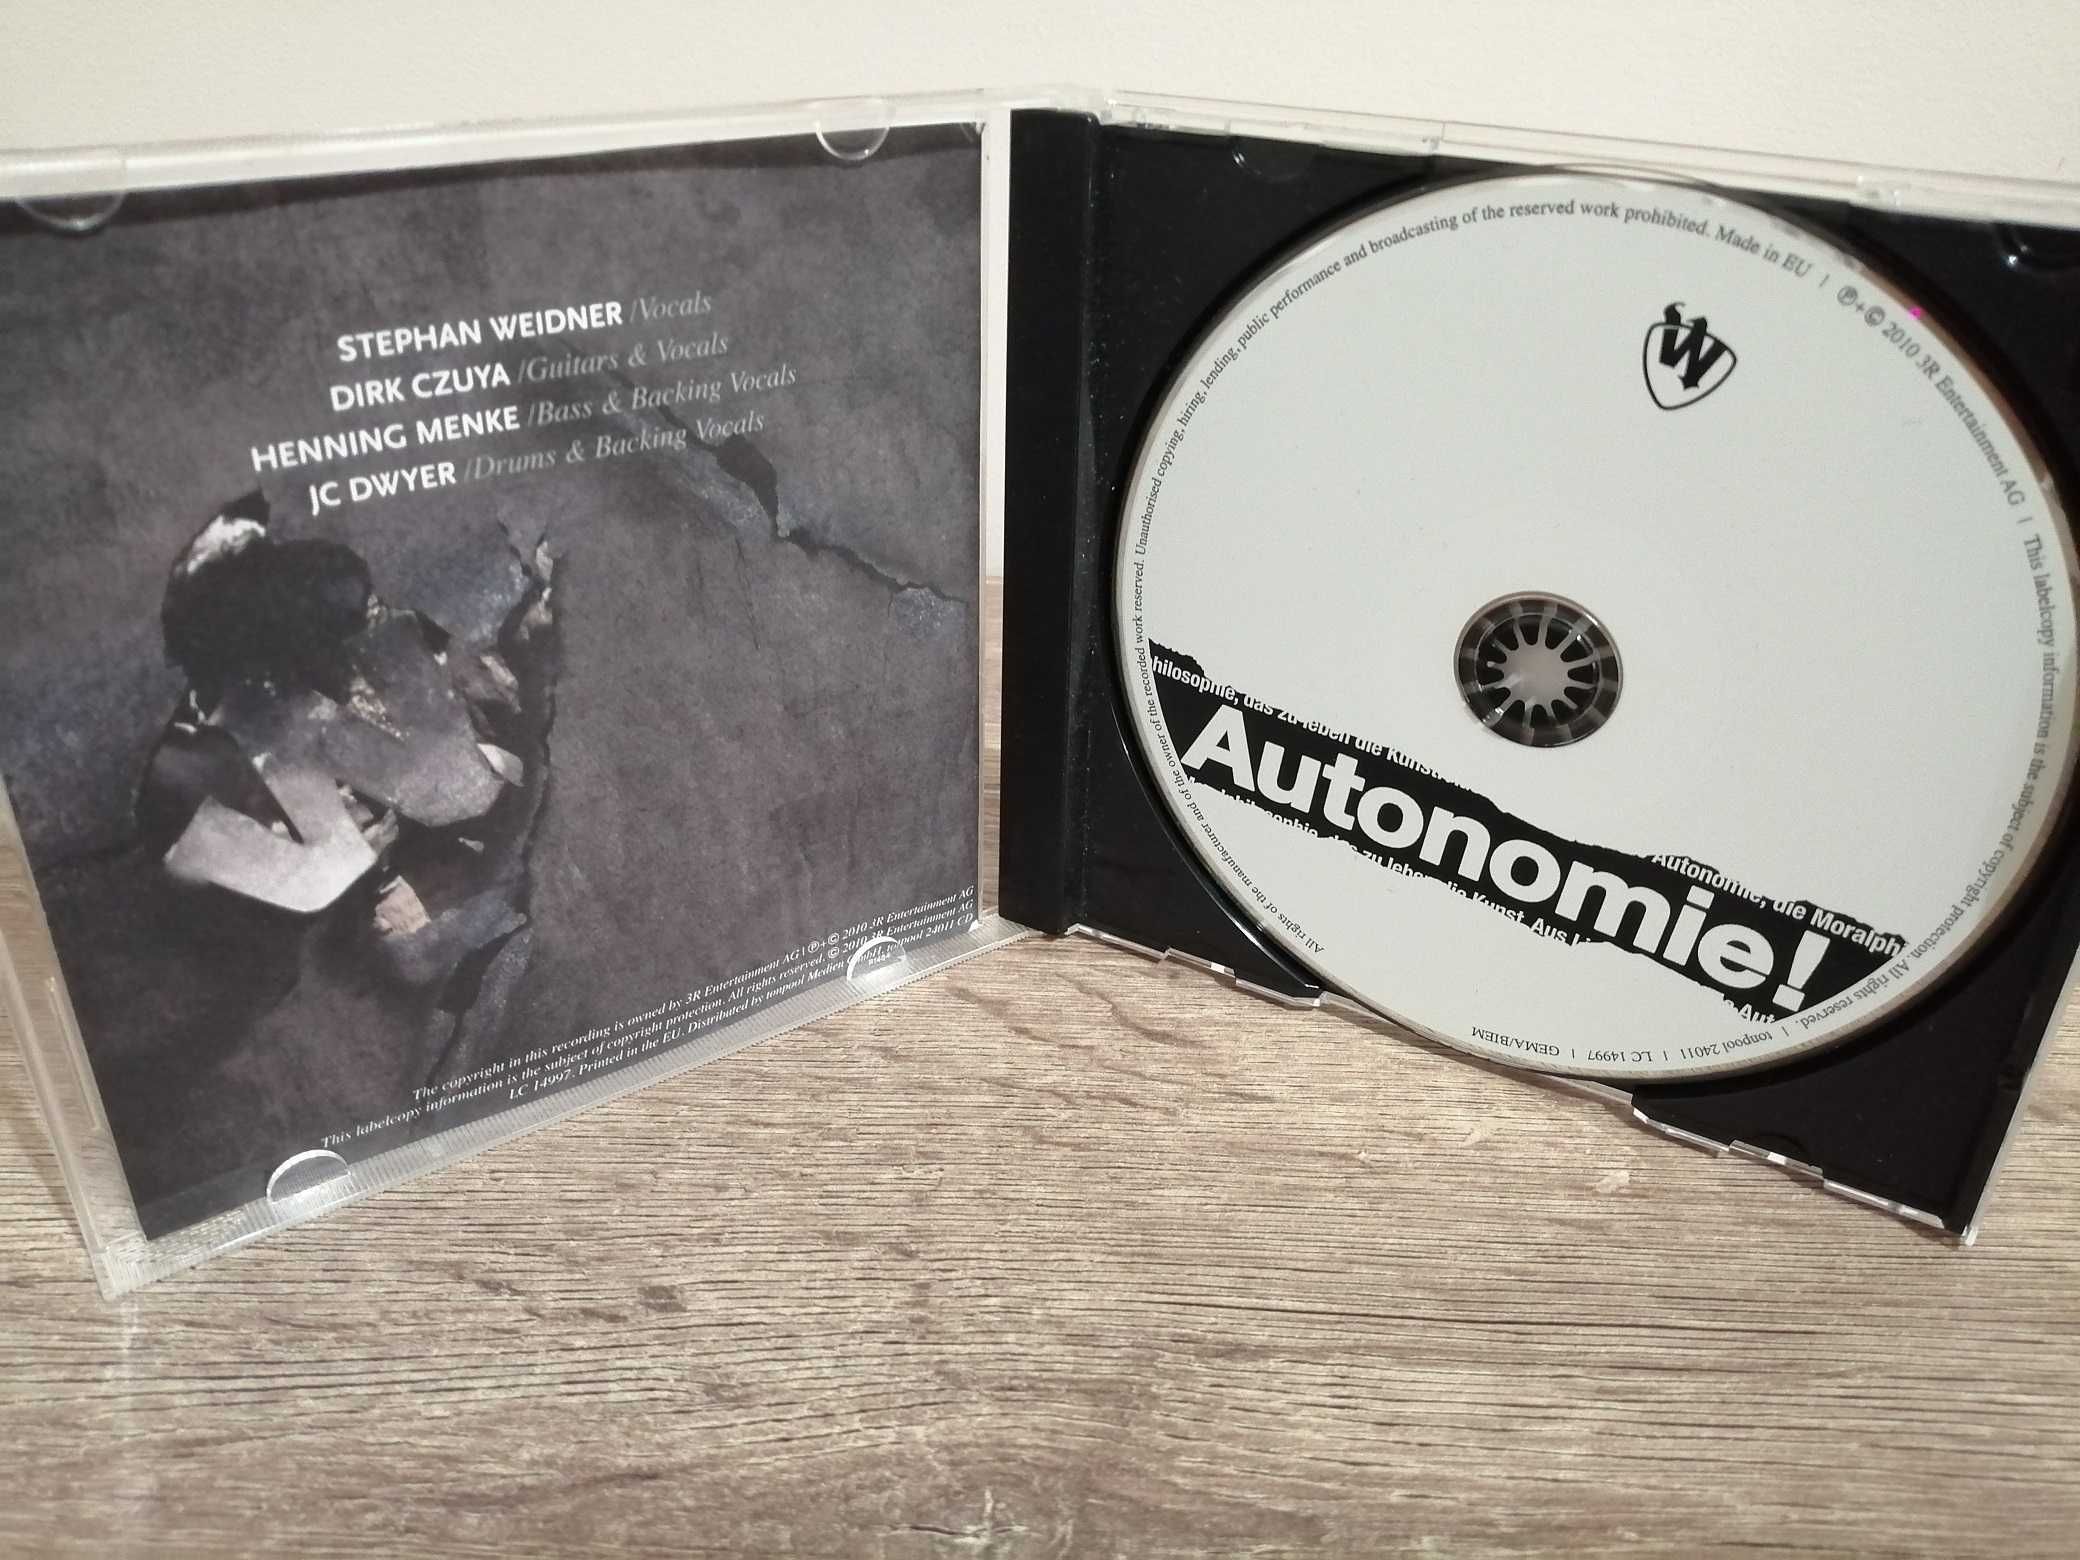 Der W – Autonomie! CD